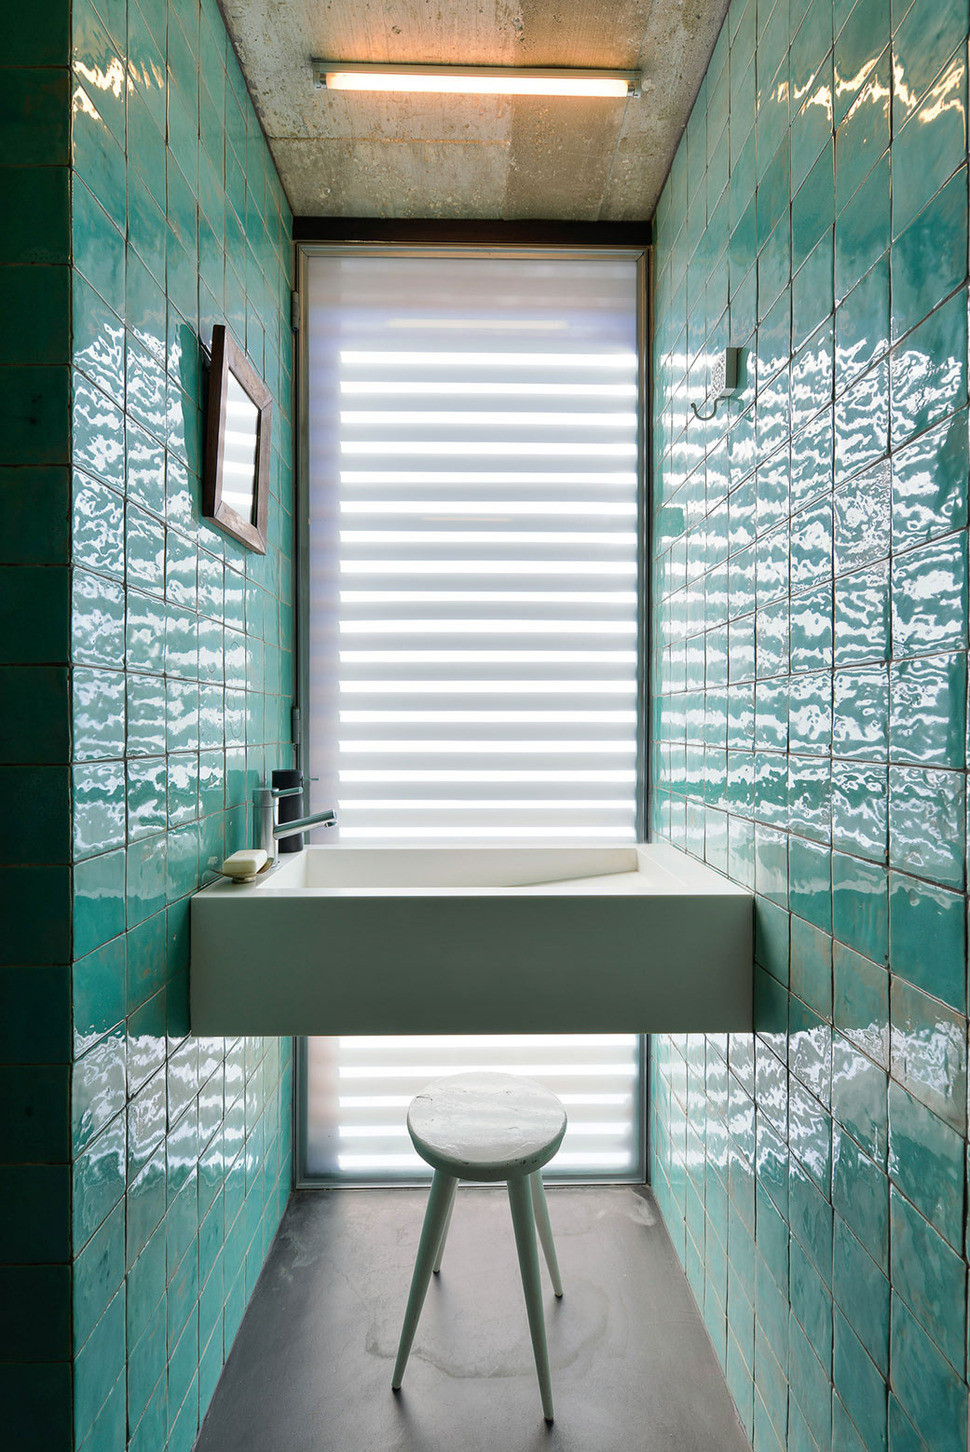 Bathroom Tile Decor
 Top 10 Tile Design Ideas for a Modern Bathroom for 2015